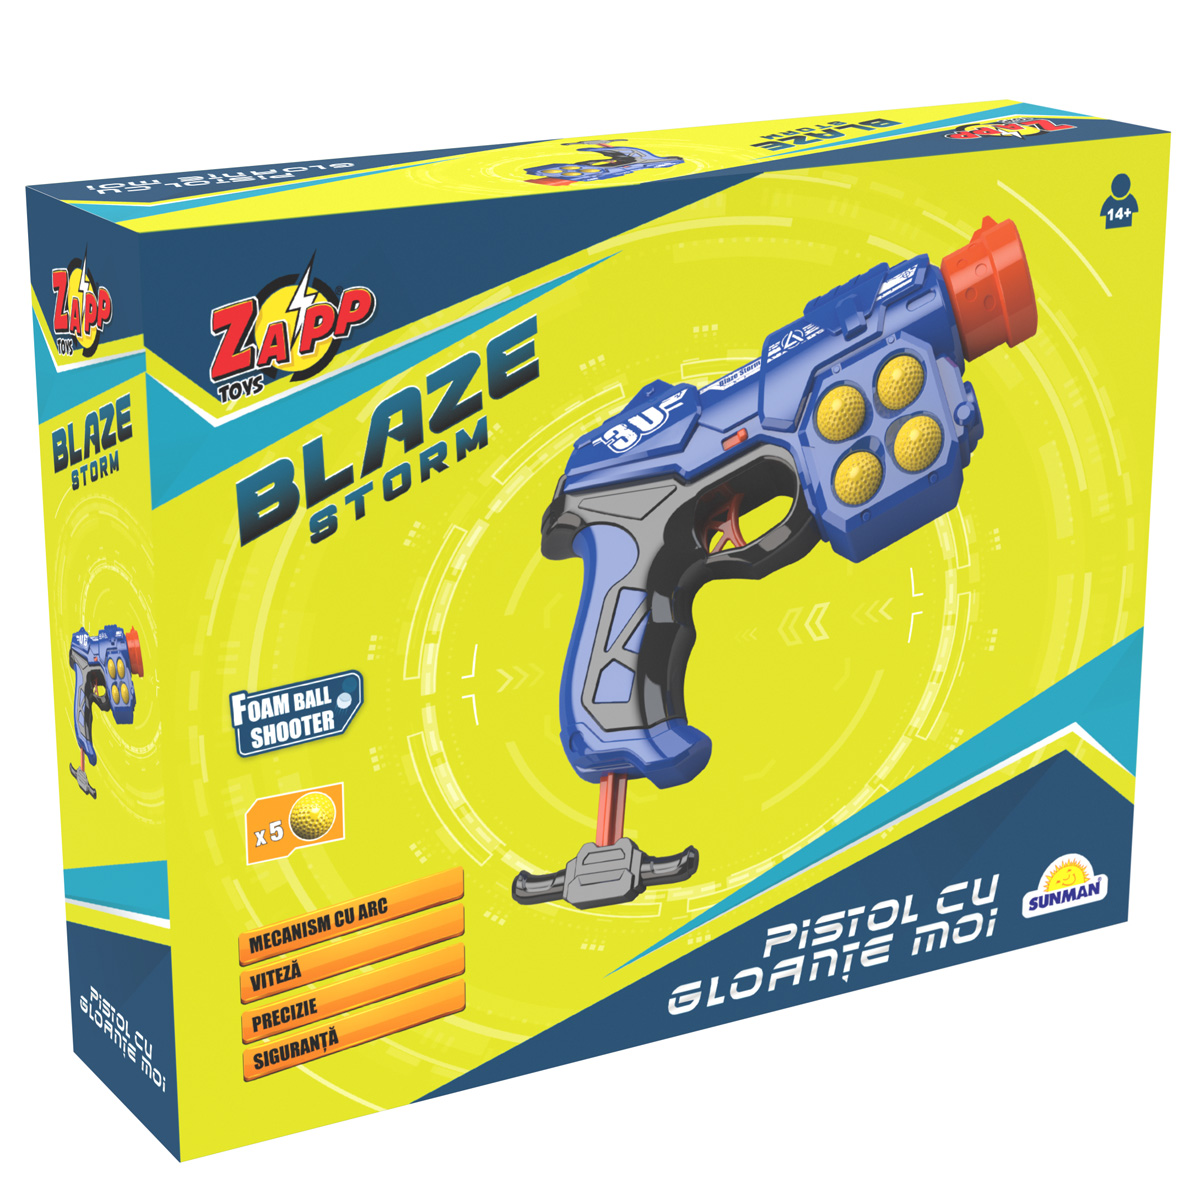 Pistol cu 5 bile din burete Blaze Storm, Zapp Toys -Storm imagine 2022 protejamcopilaria.ro